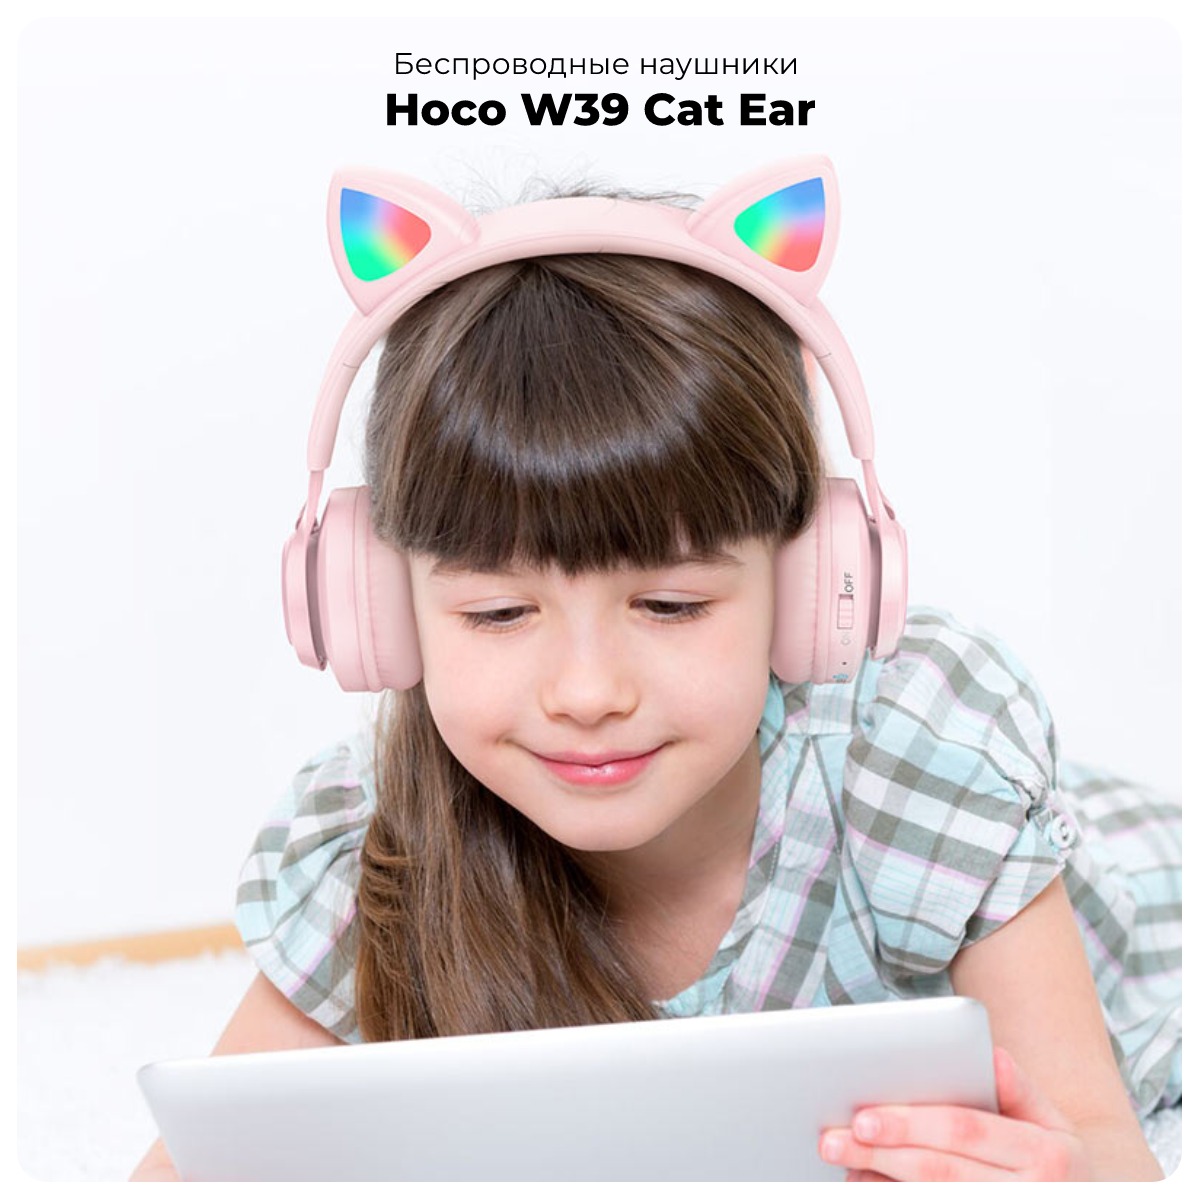 Hoco-W39-Cat-ear-01